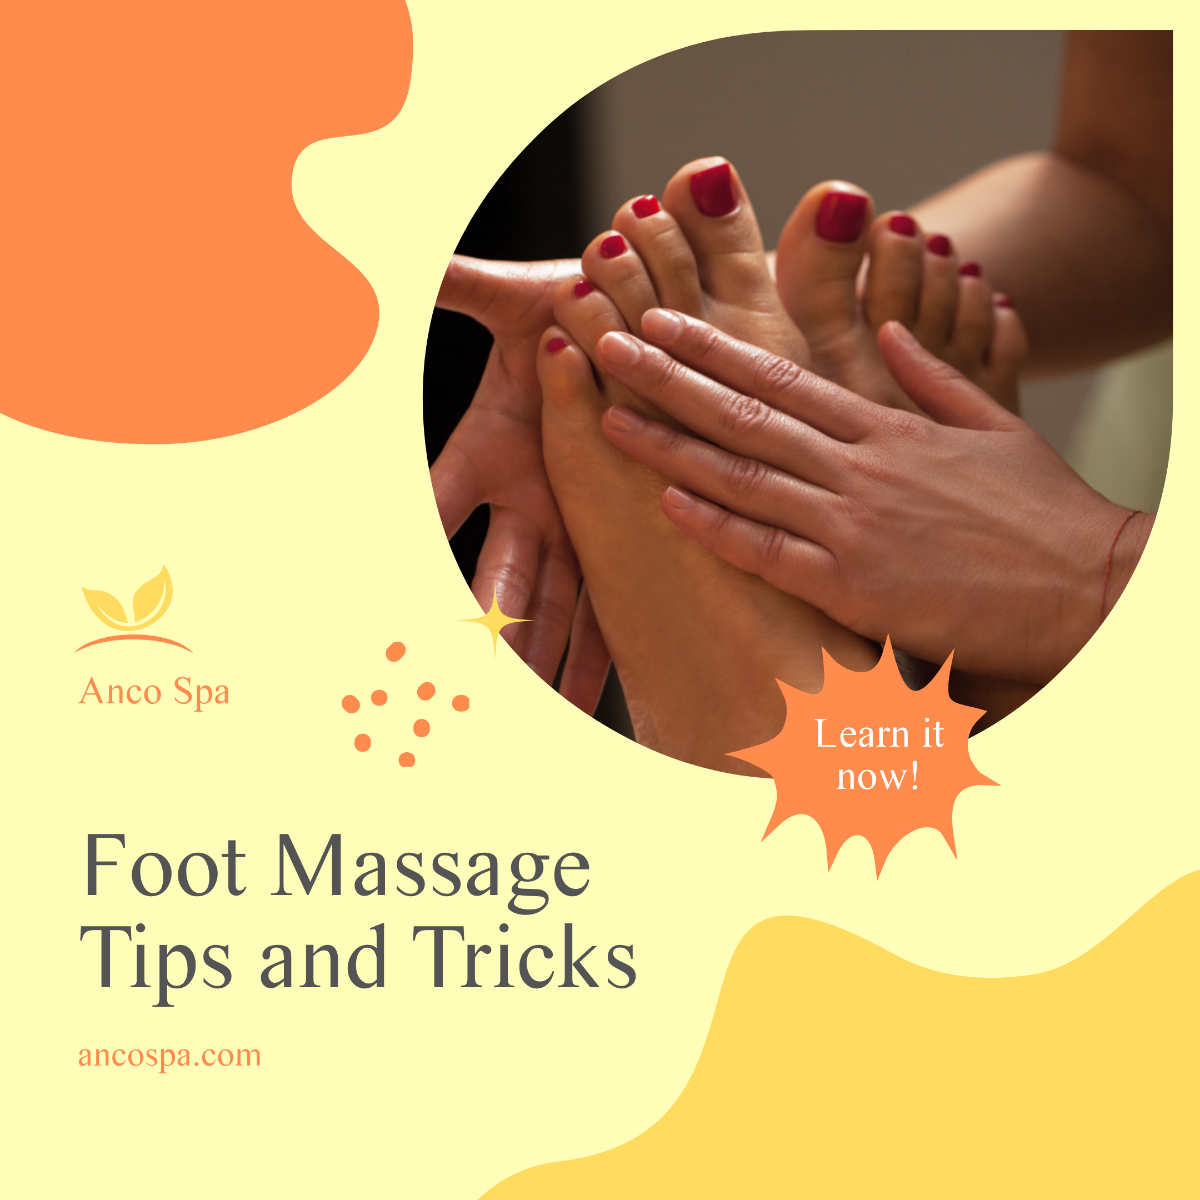 Foot Massage Tips And Tricks Post, Instagram, Facebook